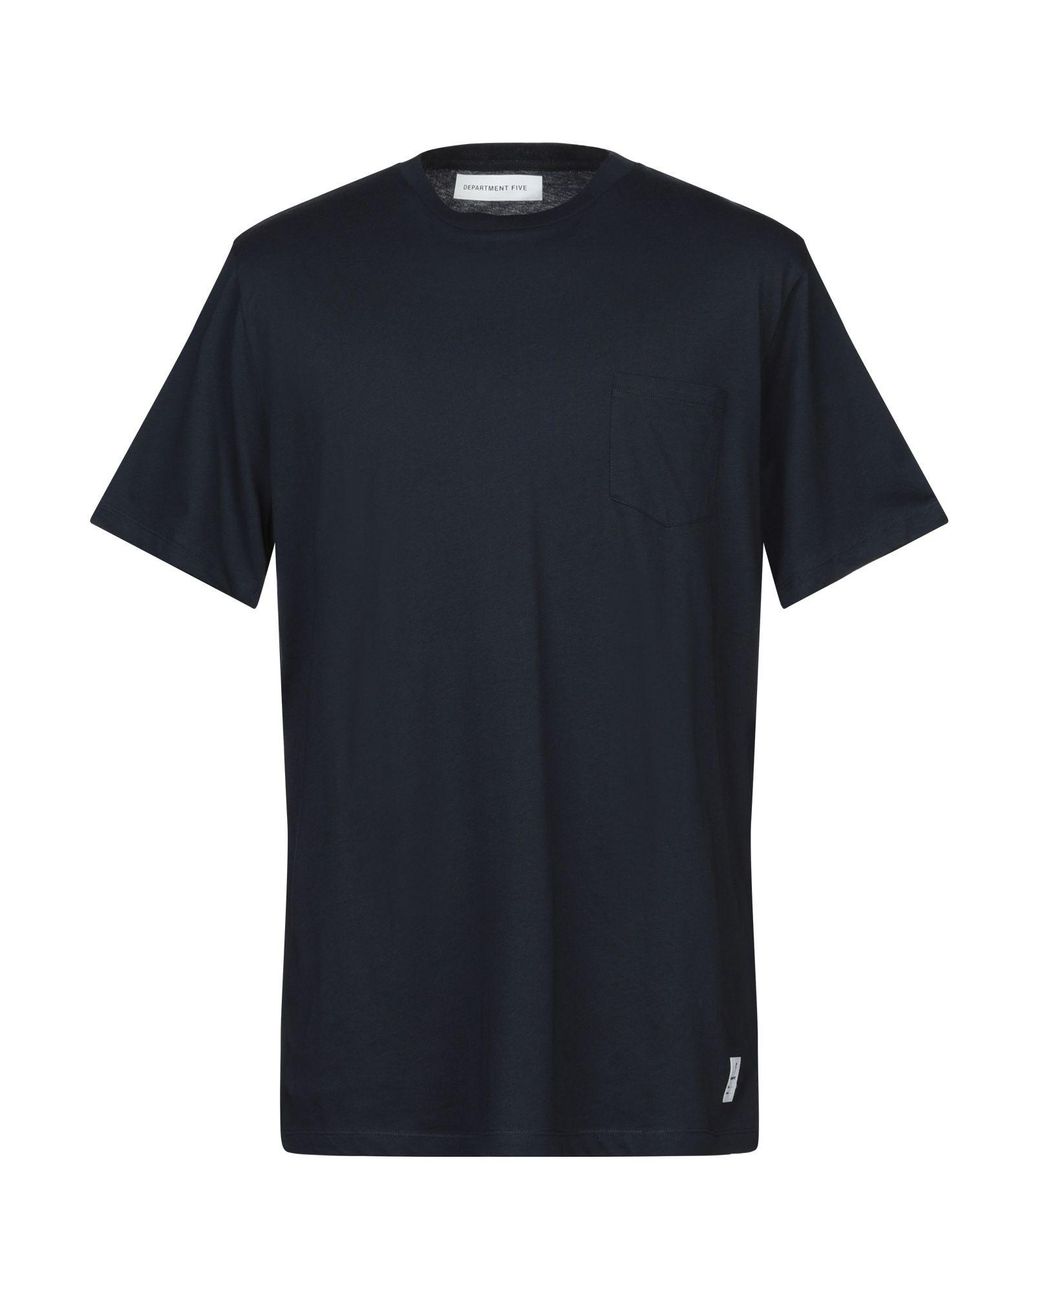 Department 5 Cotton T-shirt in Dark Blue (Blue) for Men - Lyst